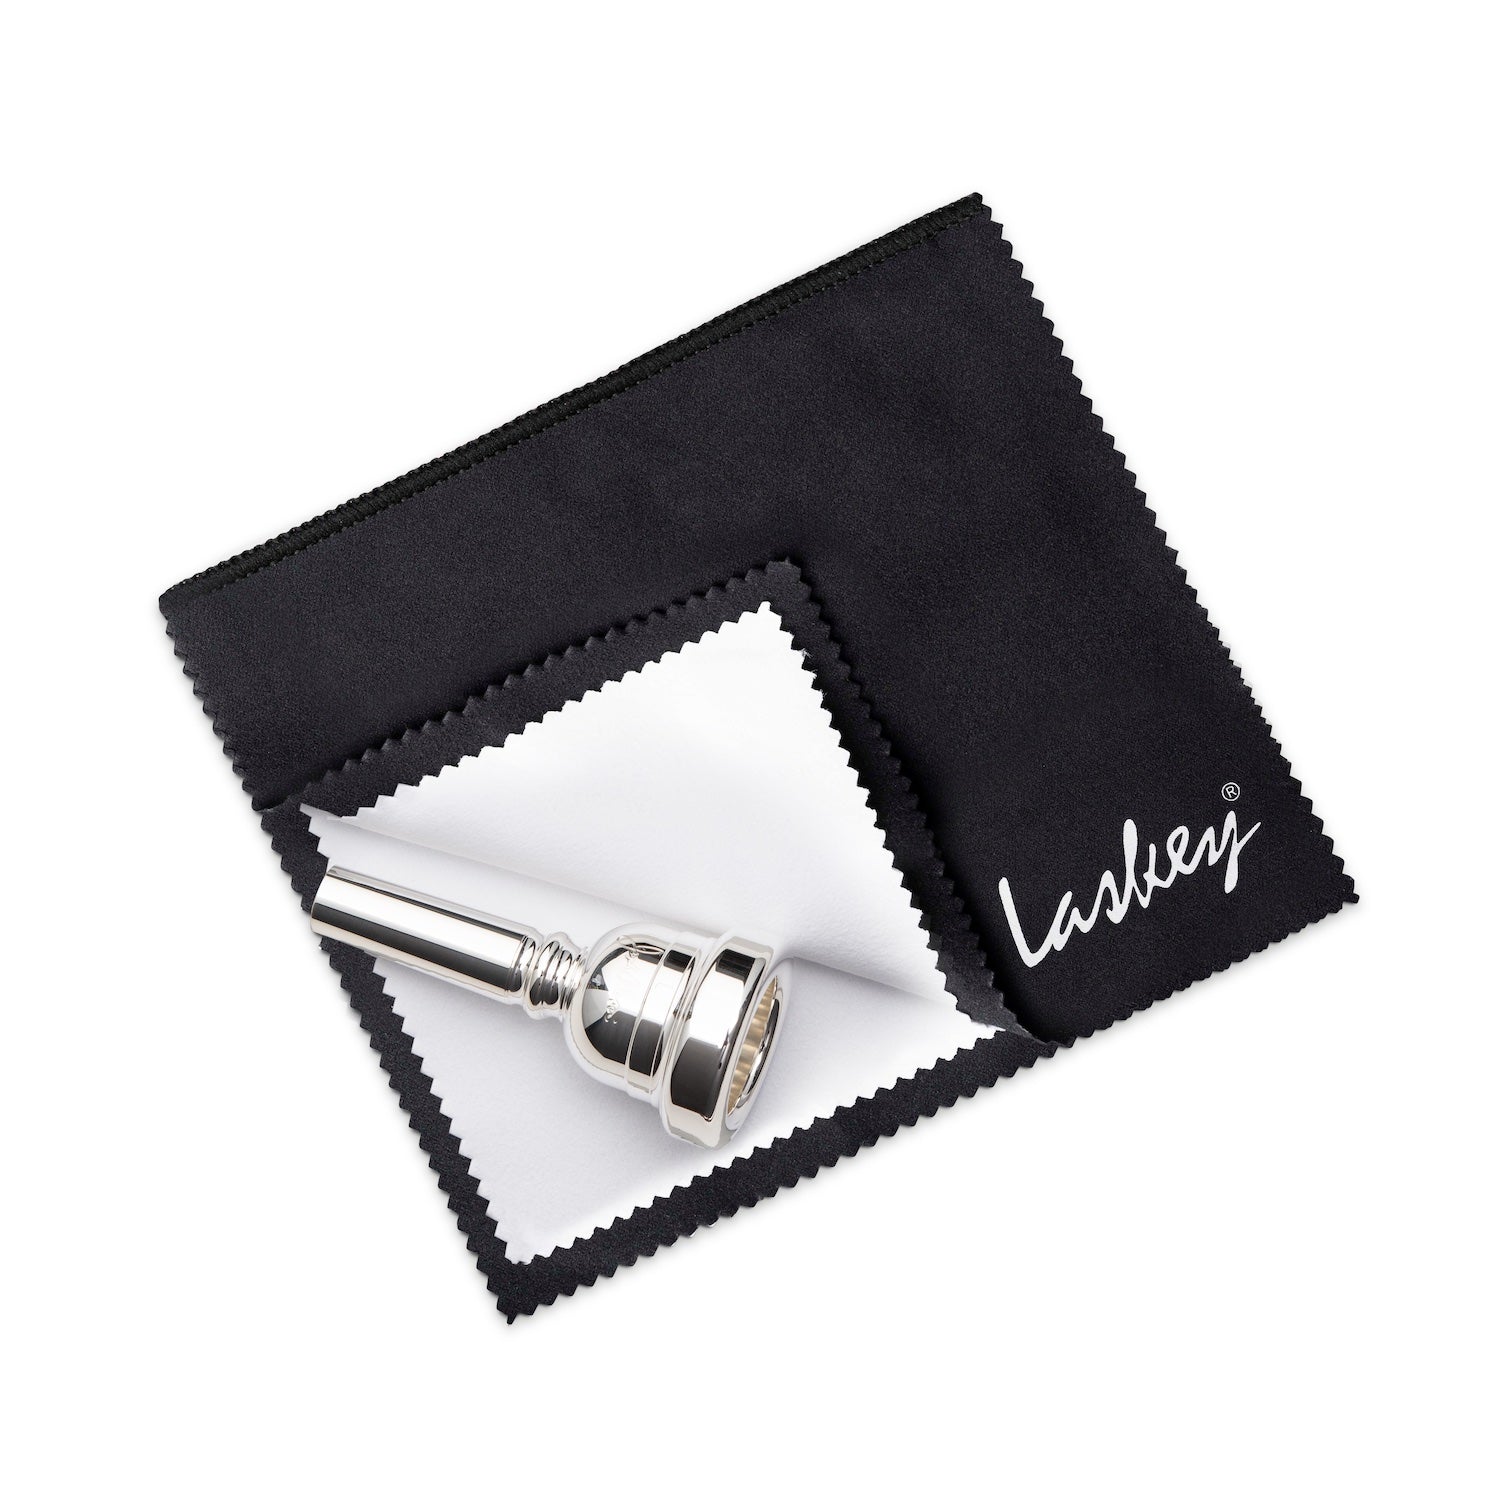 laskey-pre-treated-polishing-cloth-with-alessi-trombone-mouthpiece